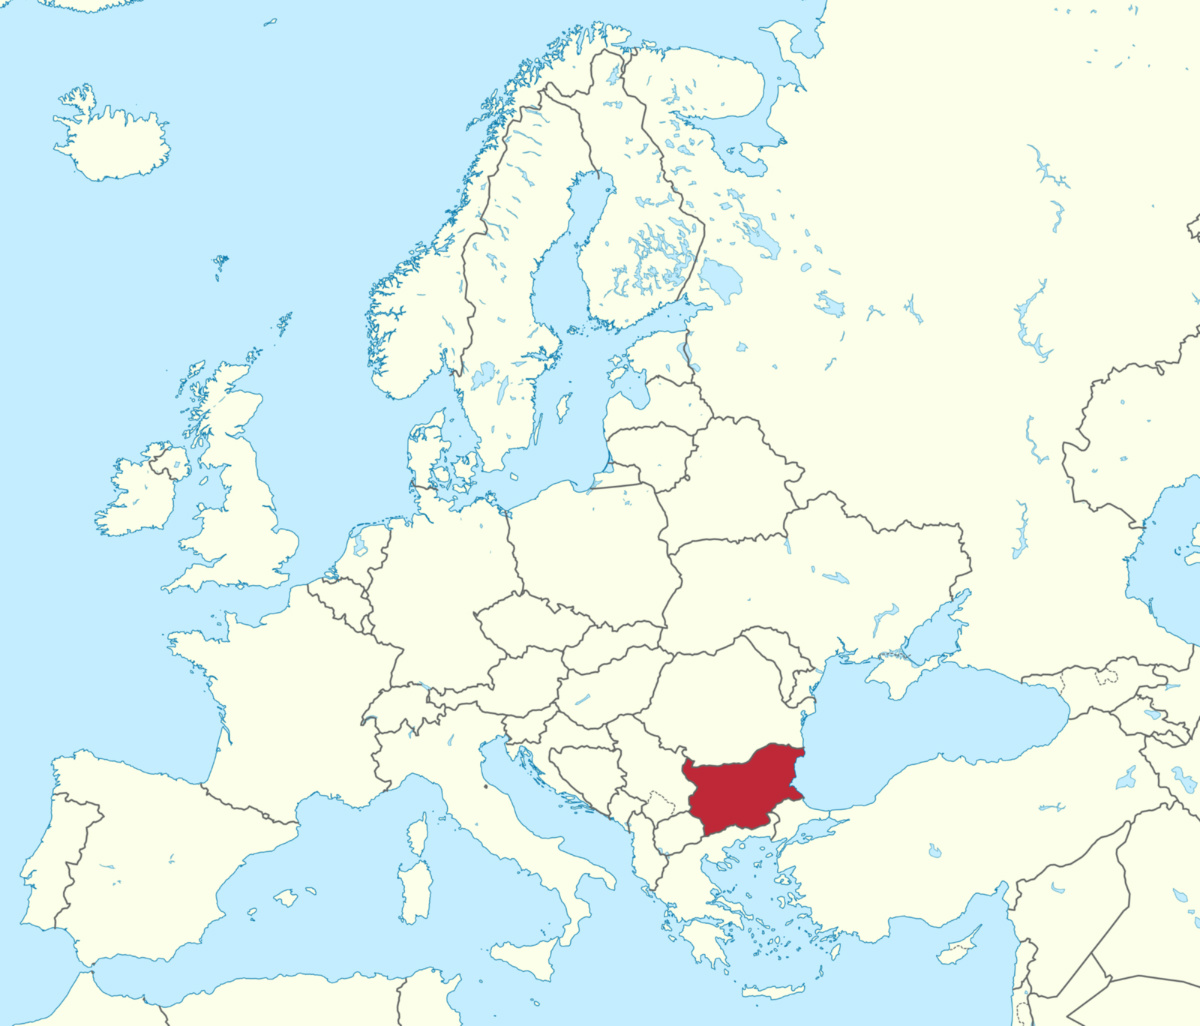 Bulgaria, red, in eastern Europe.